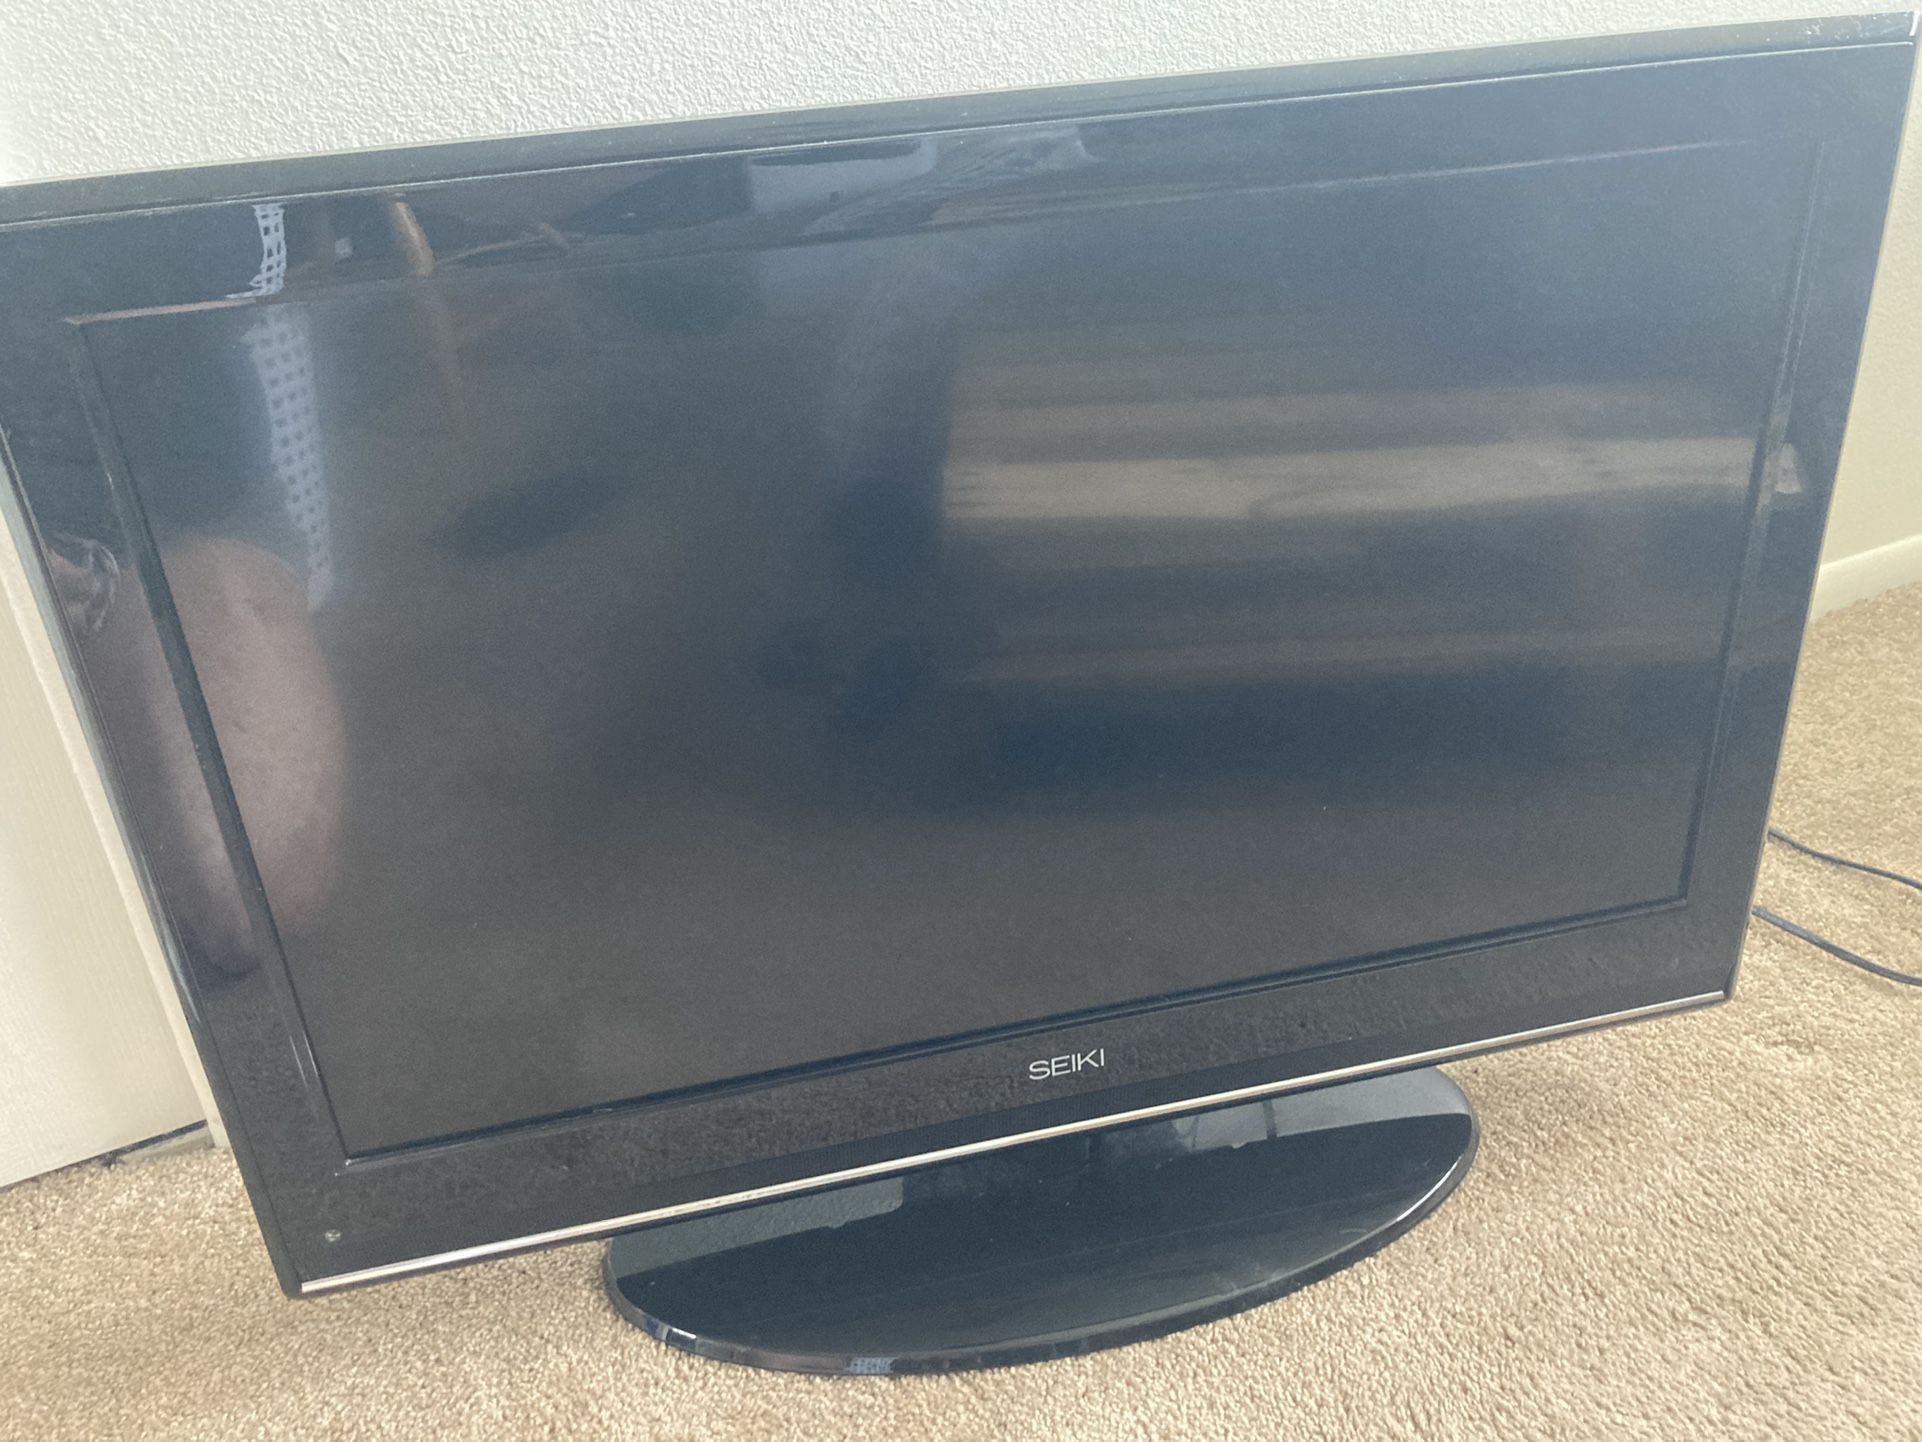 Seiki TV LC-32G82 32-Inch 1080p 60Hz LCD HD TV (Black) AND ROKU STICK.  